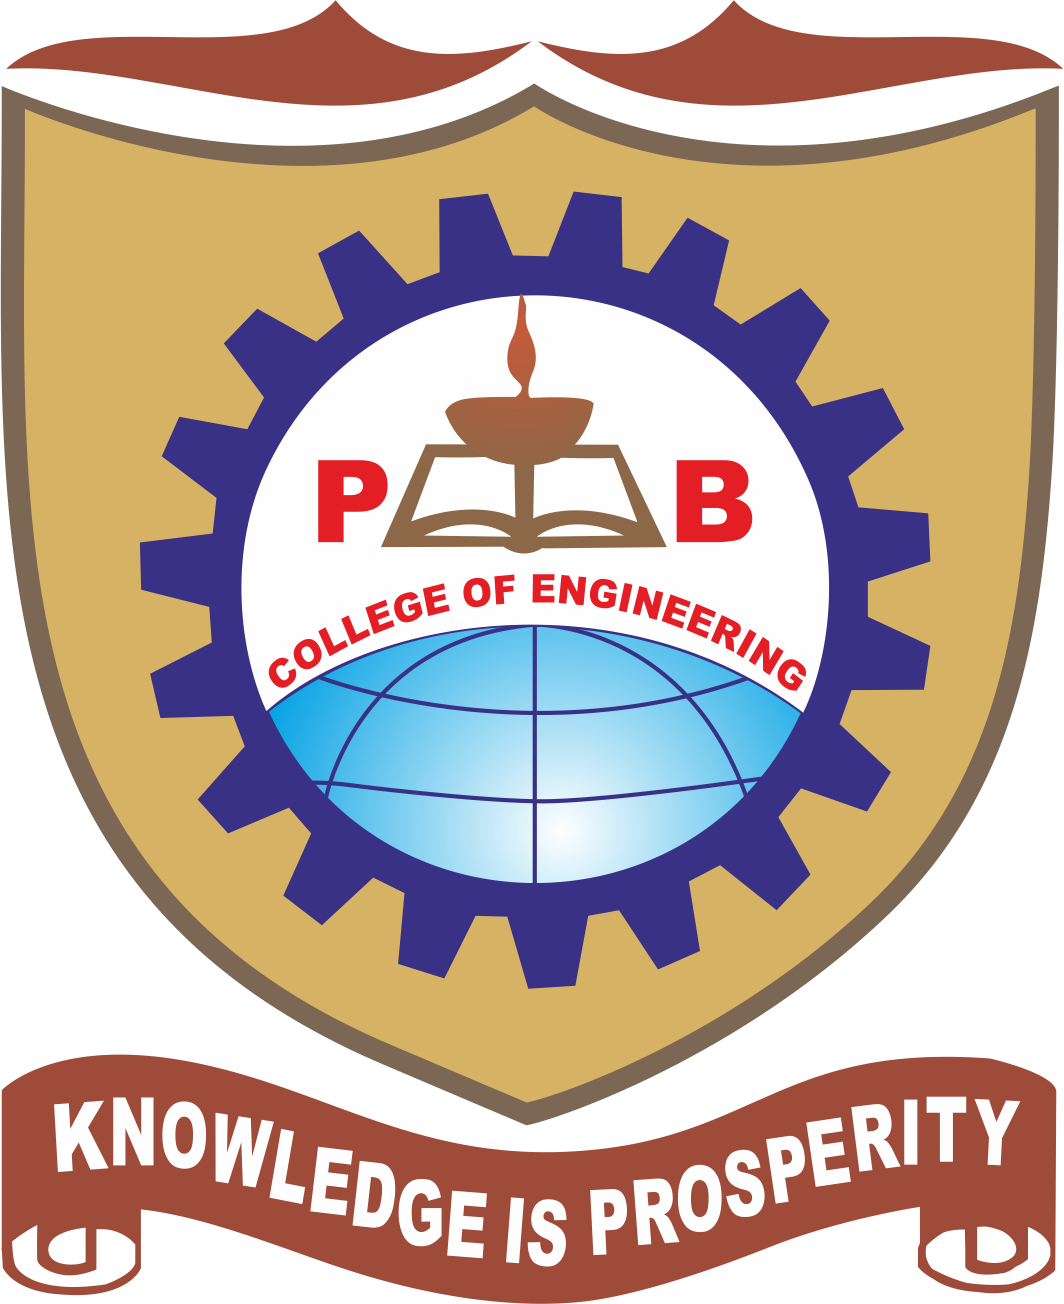 P.B. College of Engineering